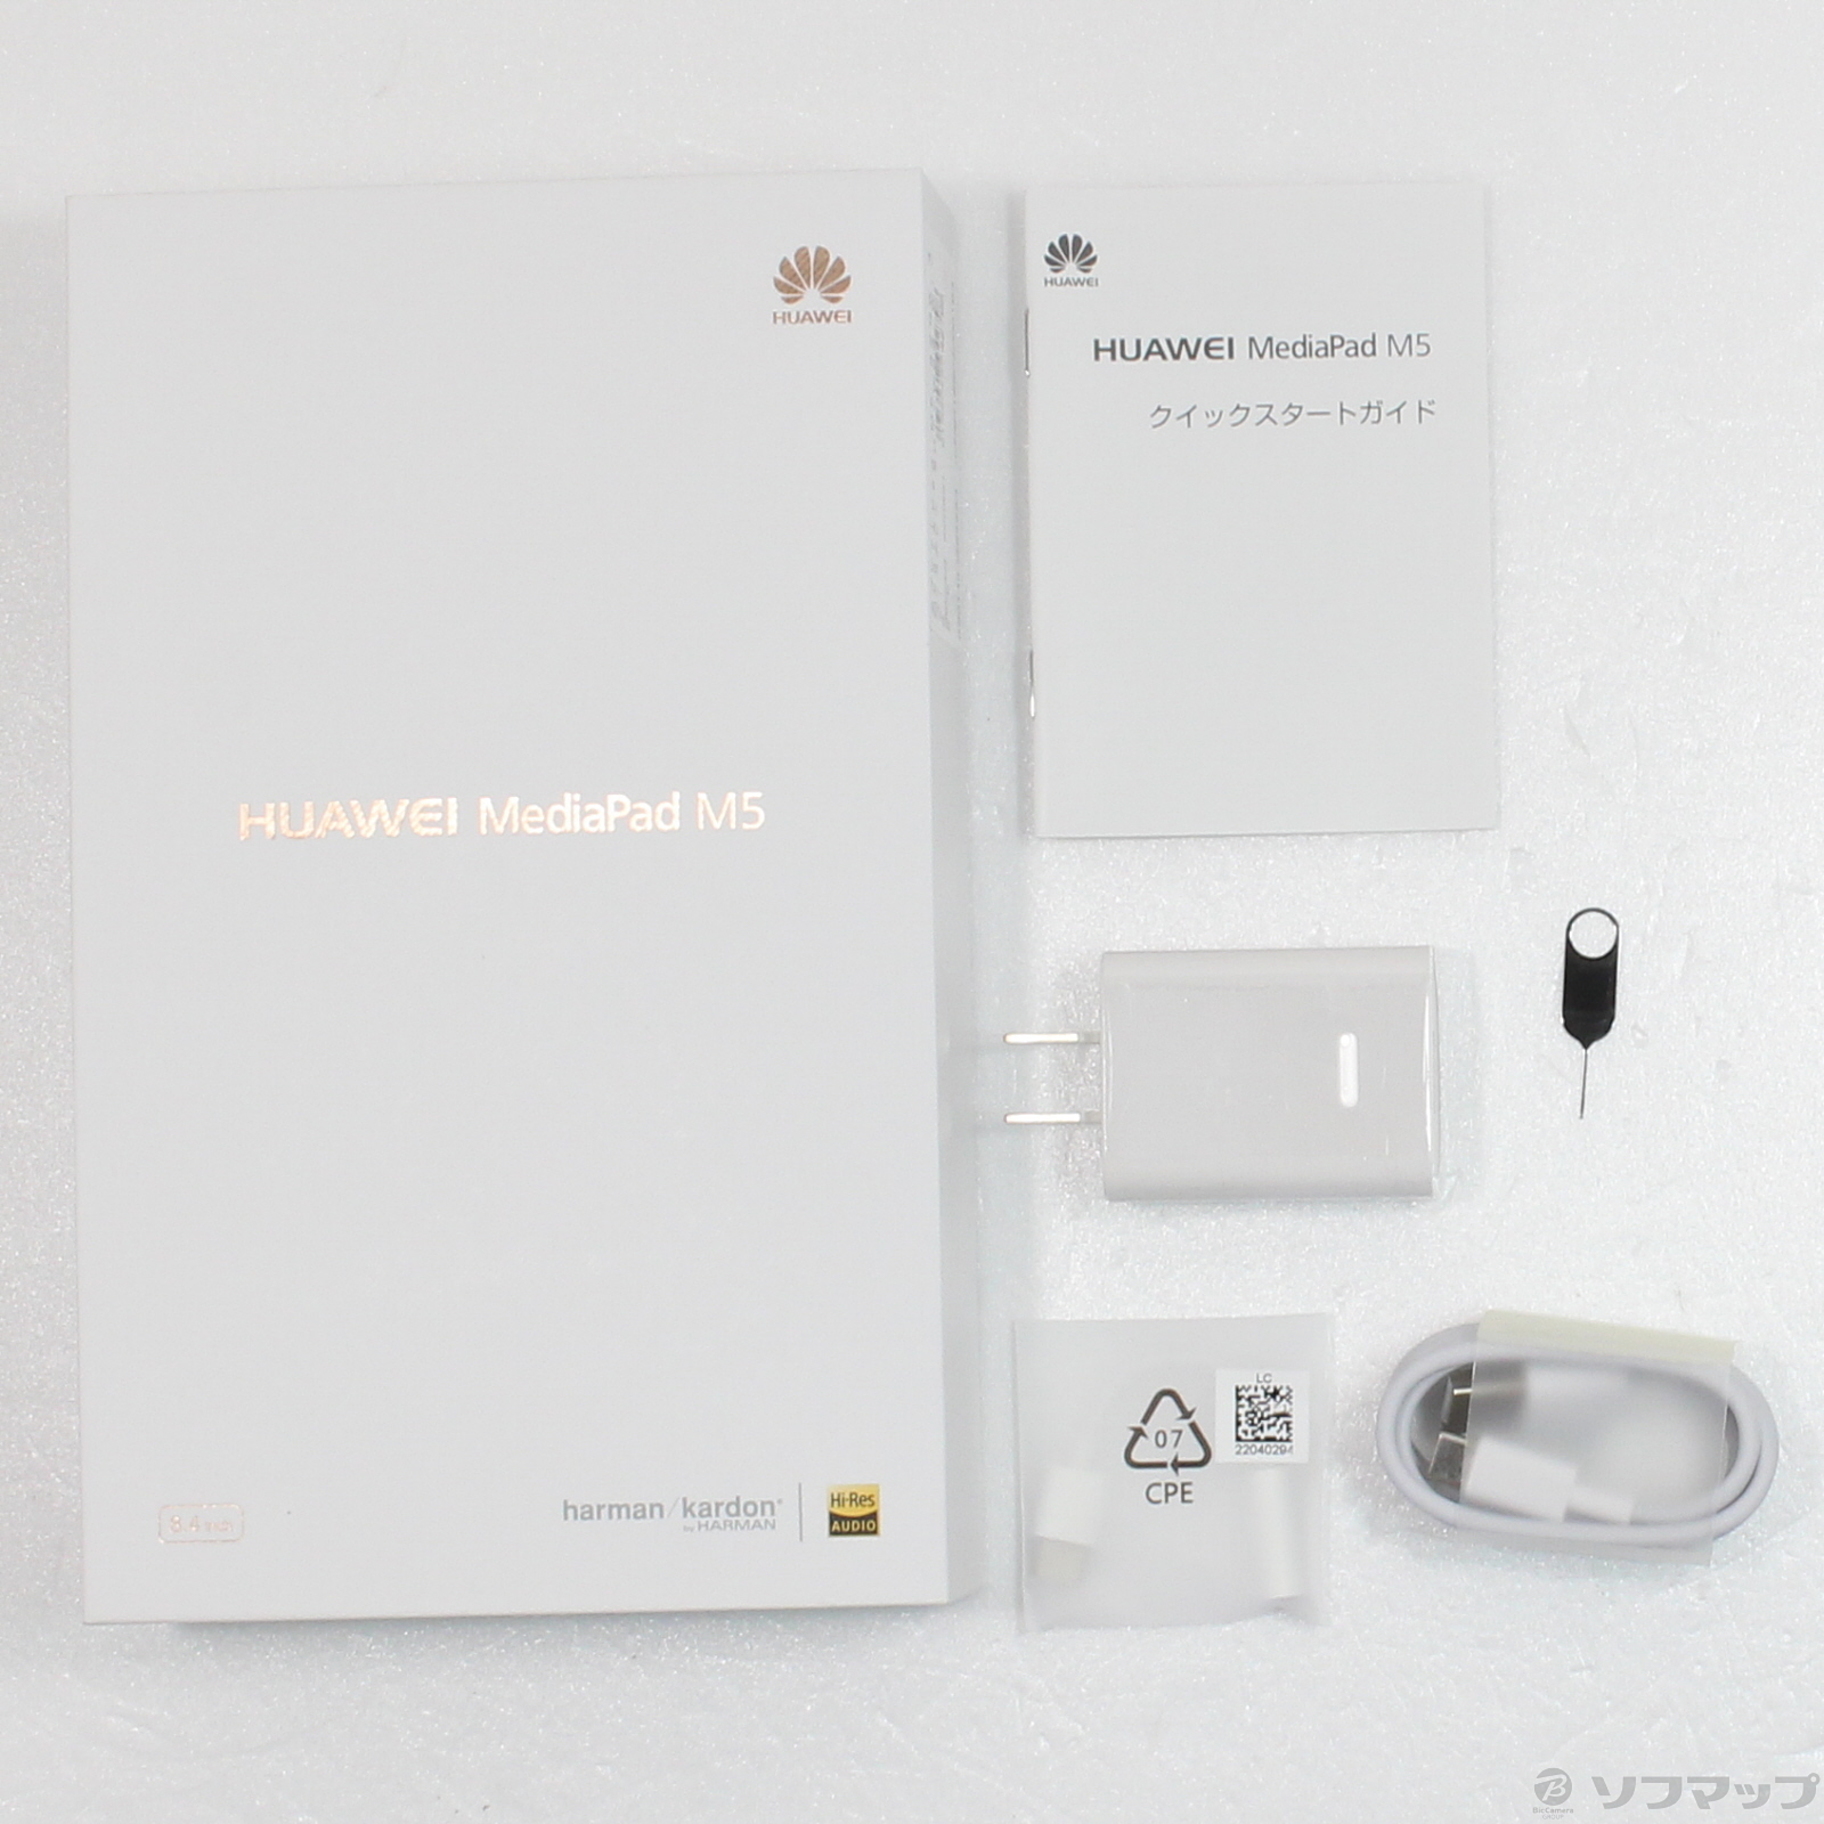 MediaPad M5 32GB スペースグレイ SHT-W09 Wi-Fi